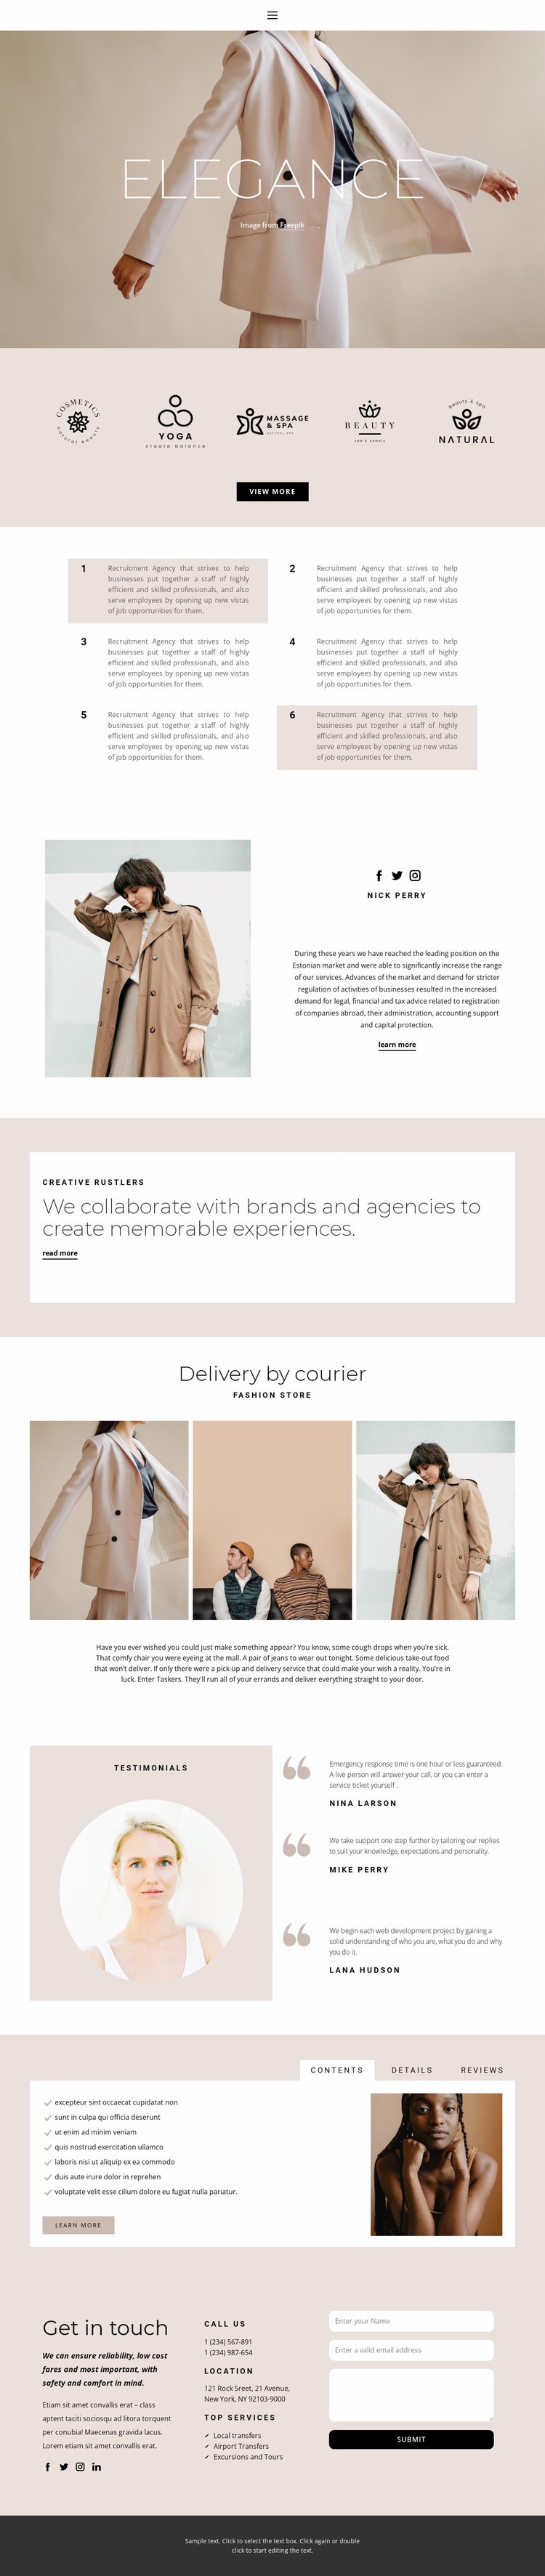 Elegance in fashion Homepage Design